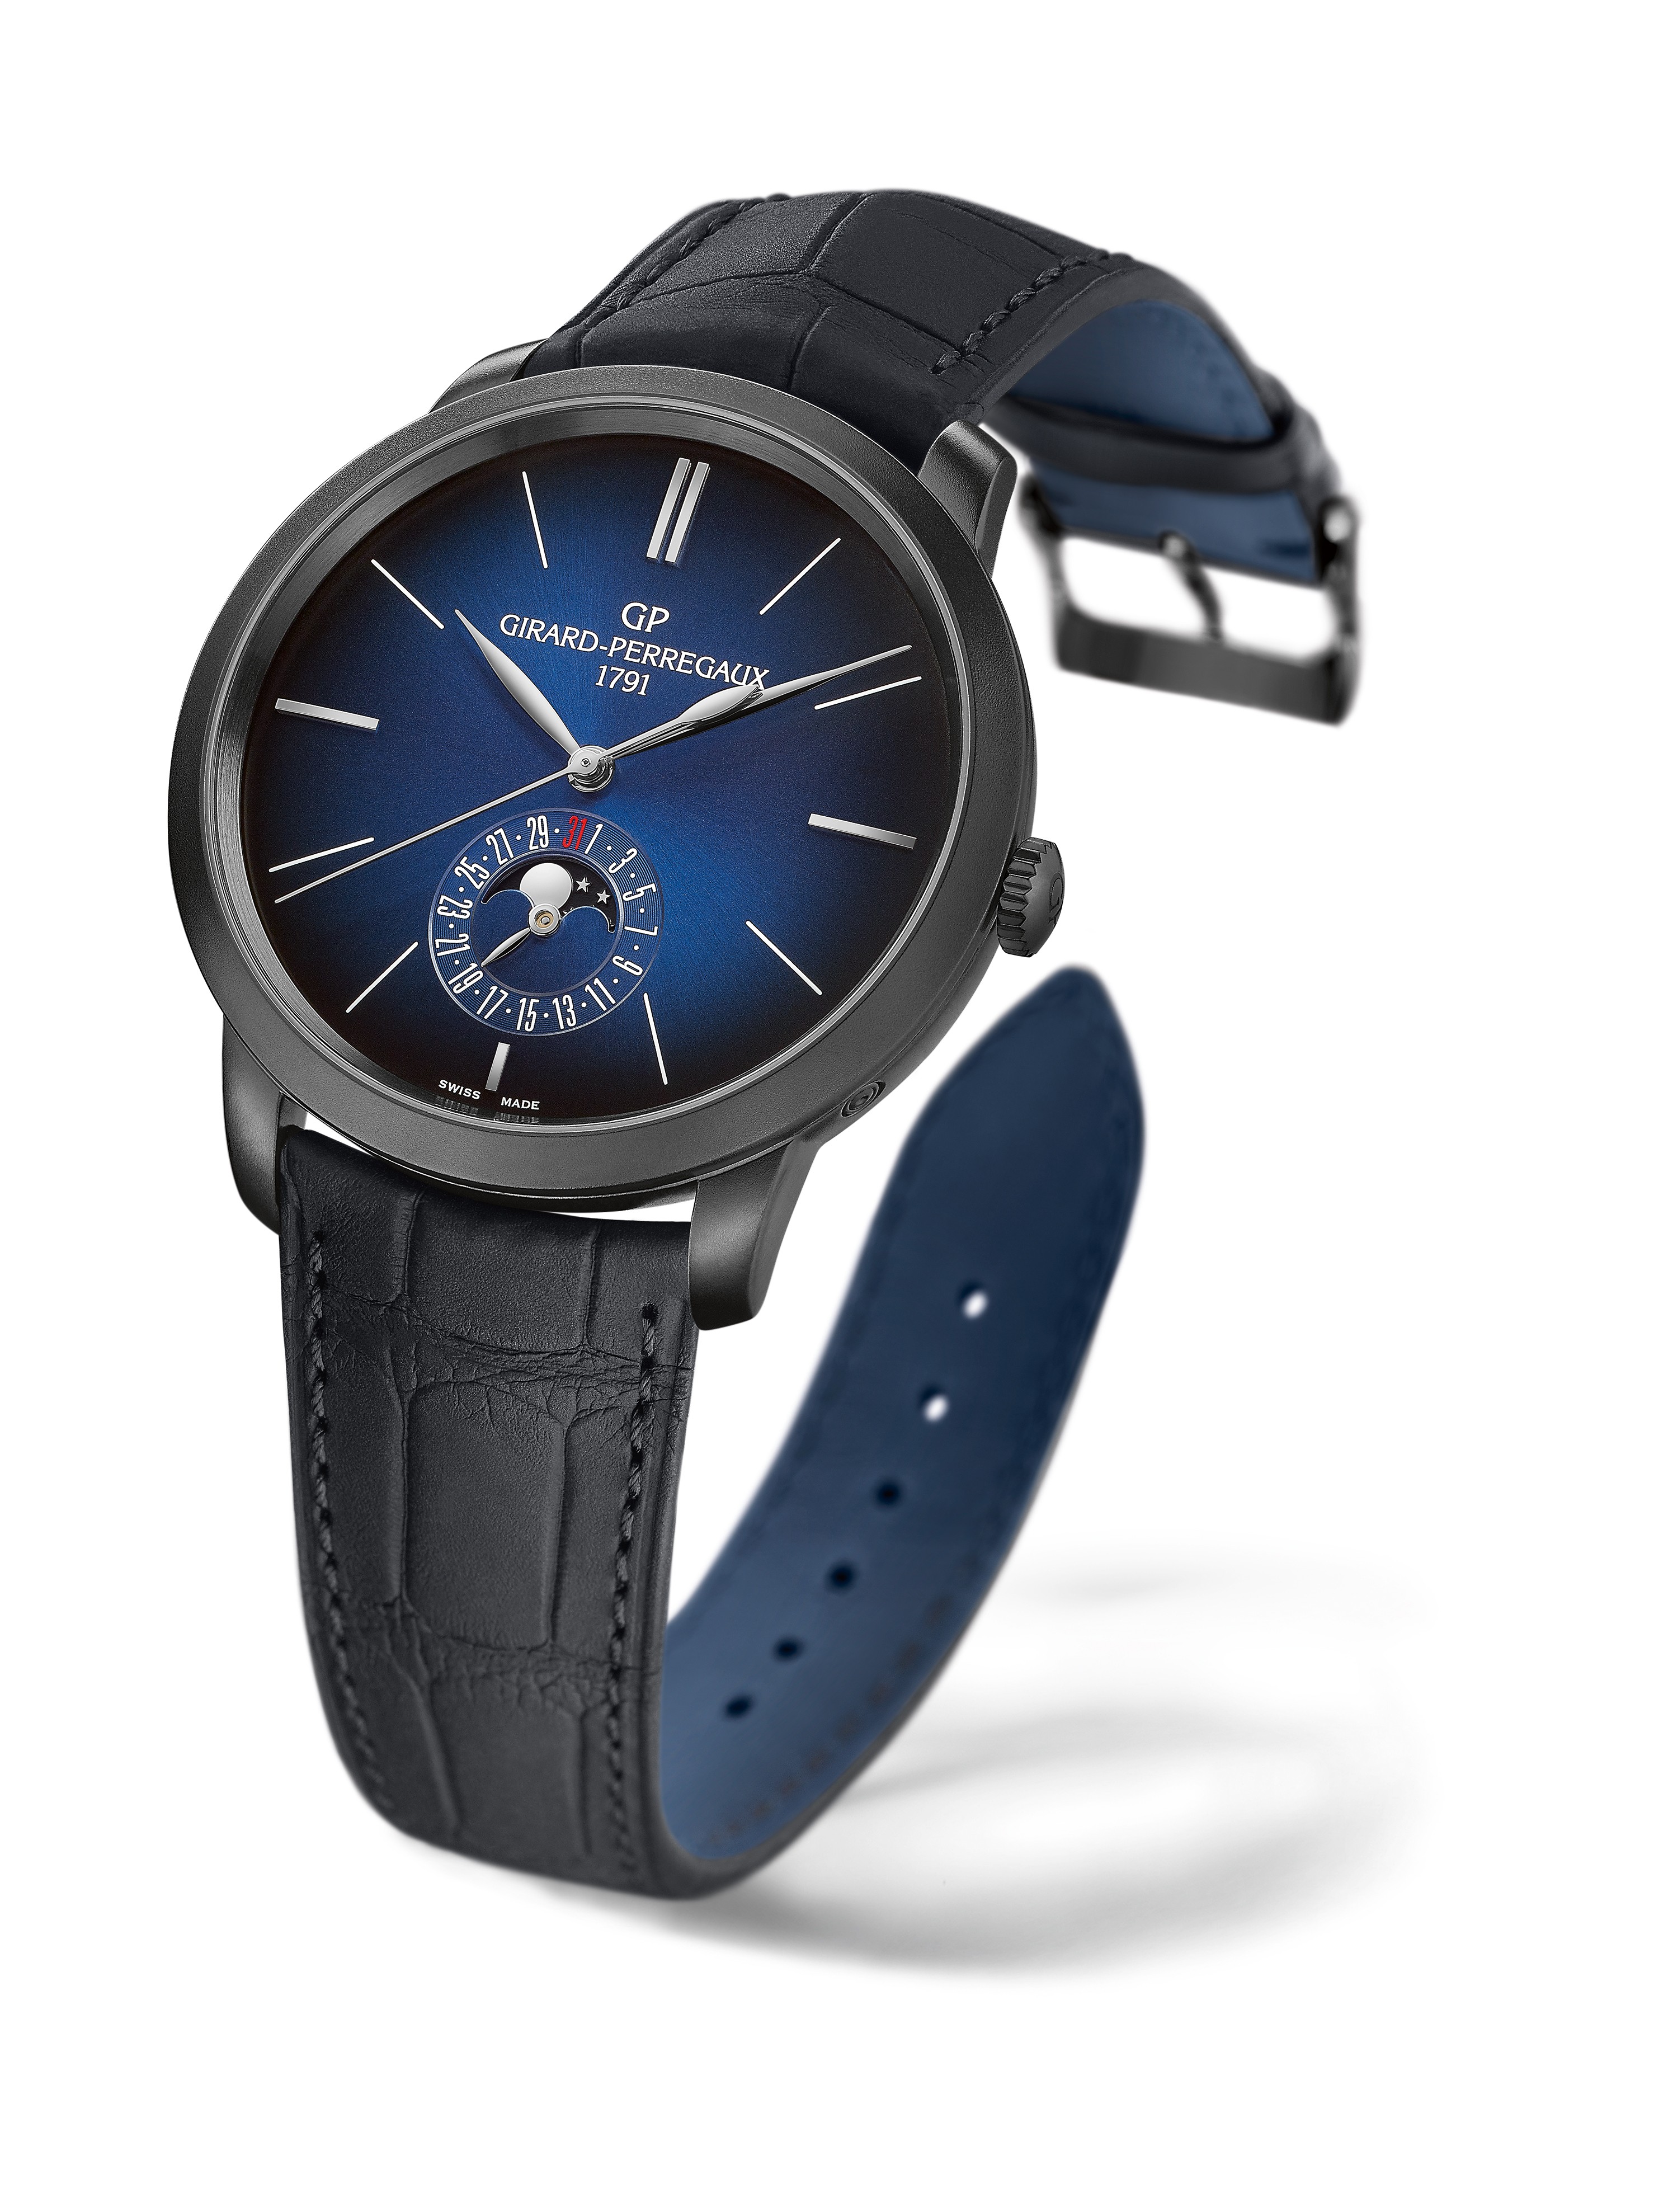 The Girard-Perregaux 1966 Blue Moon watch.